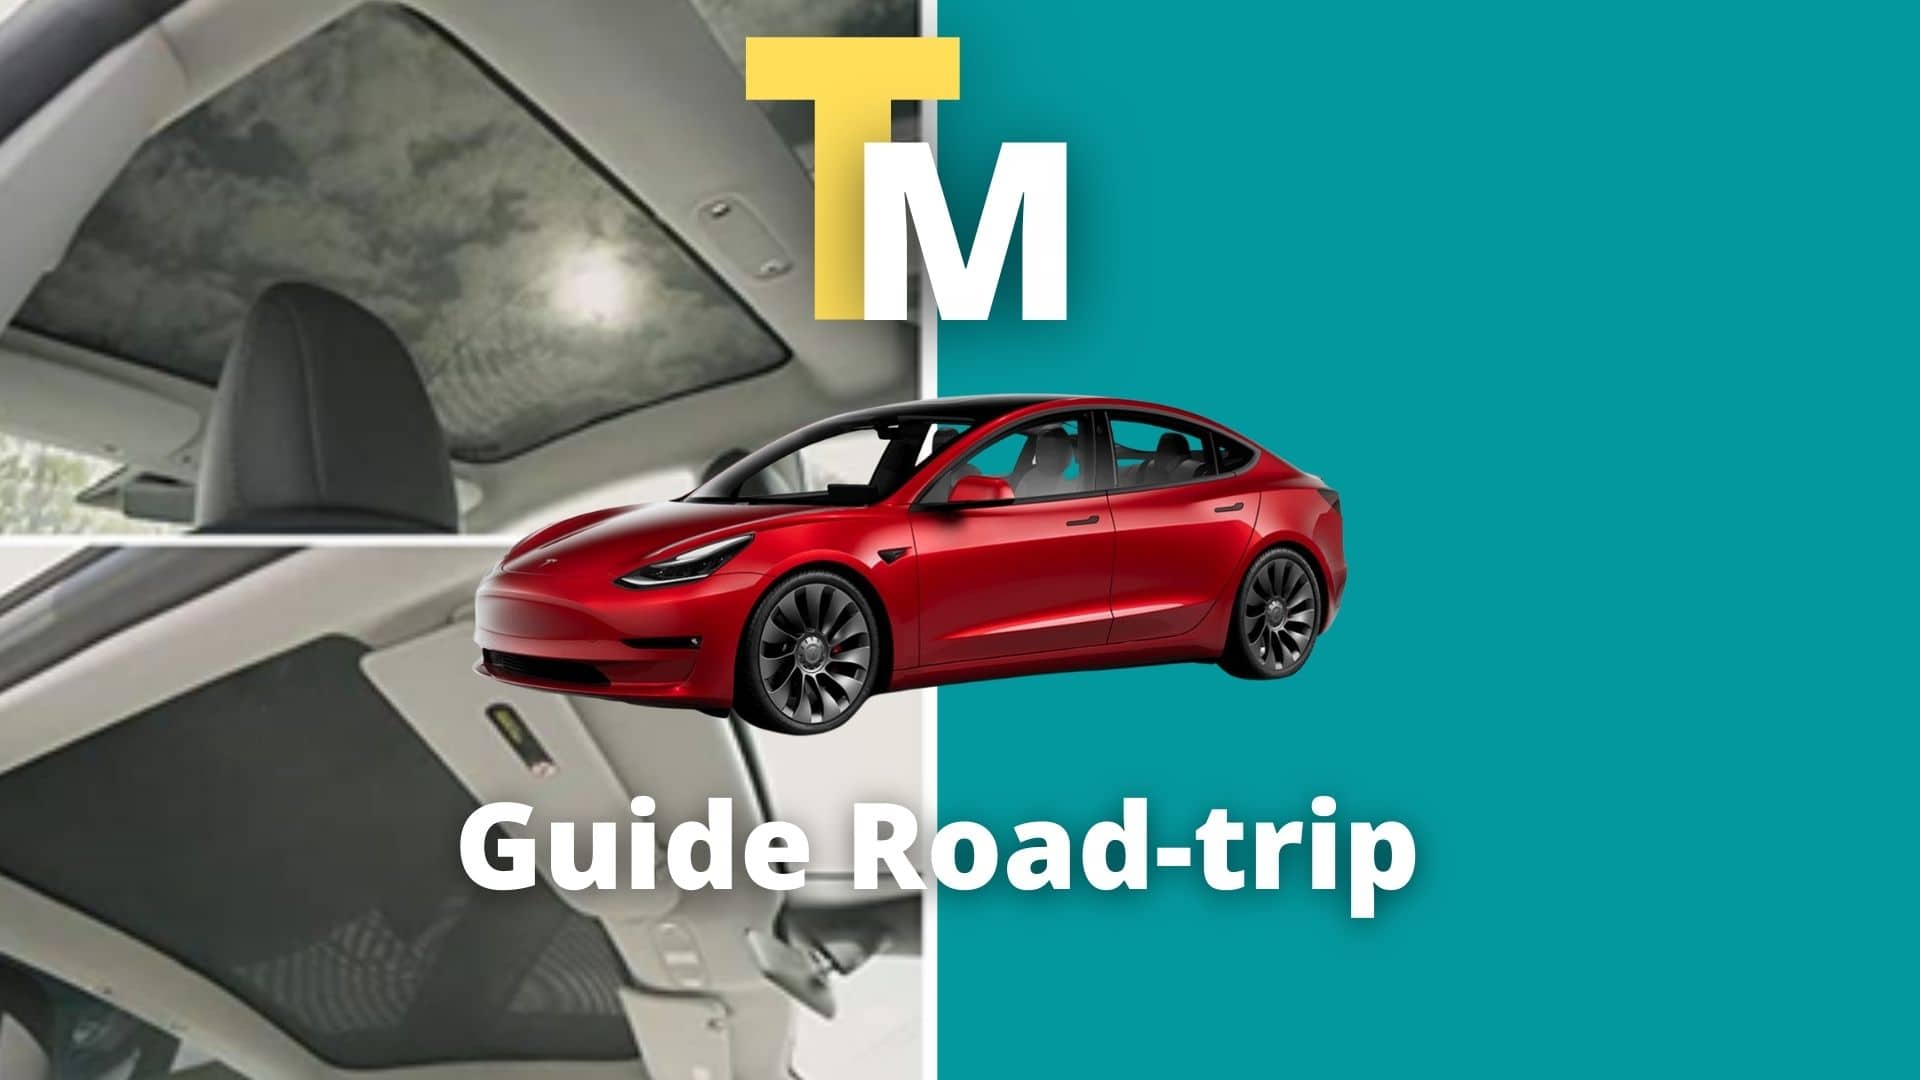 Guide road-trip